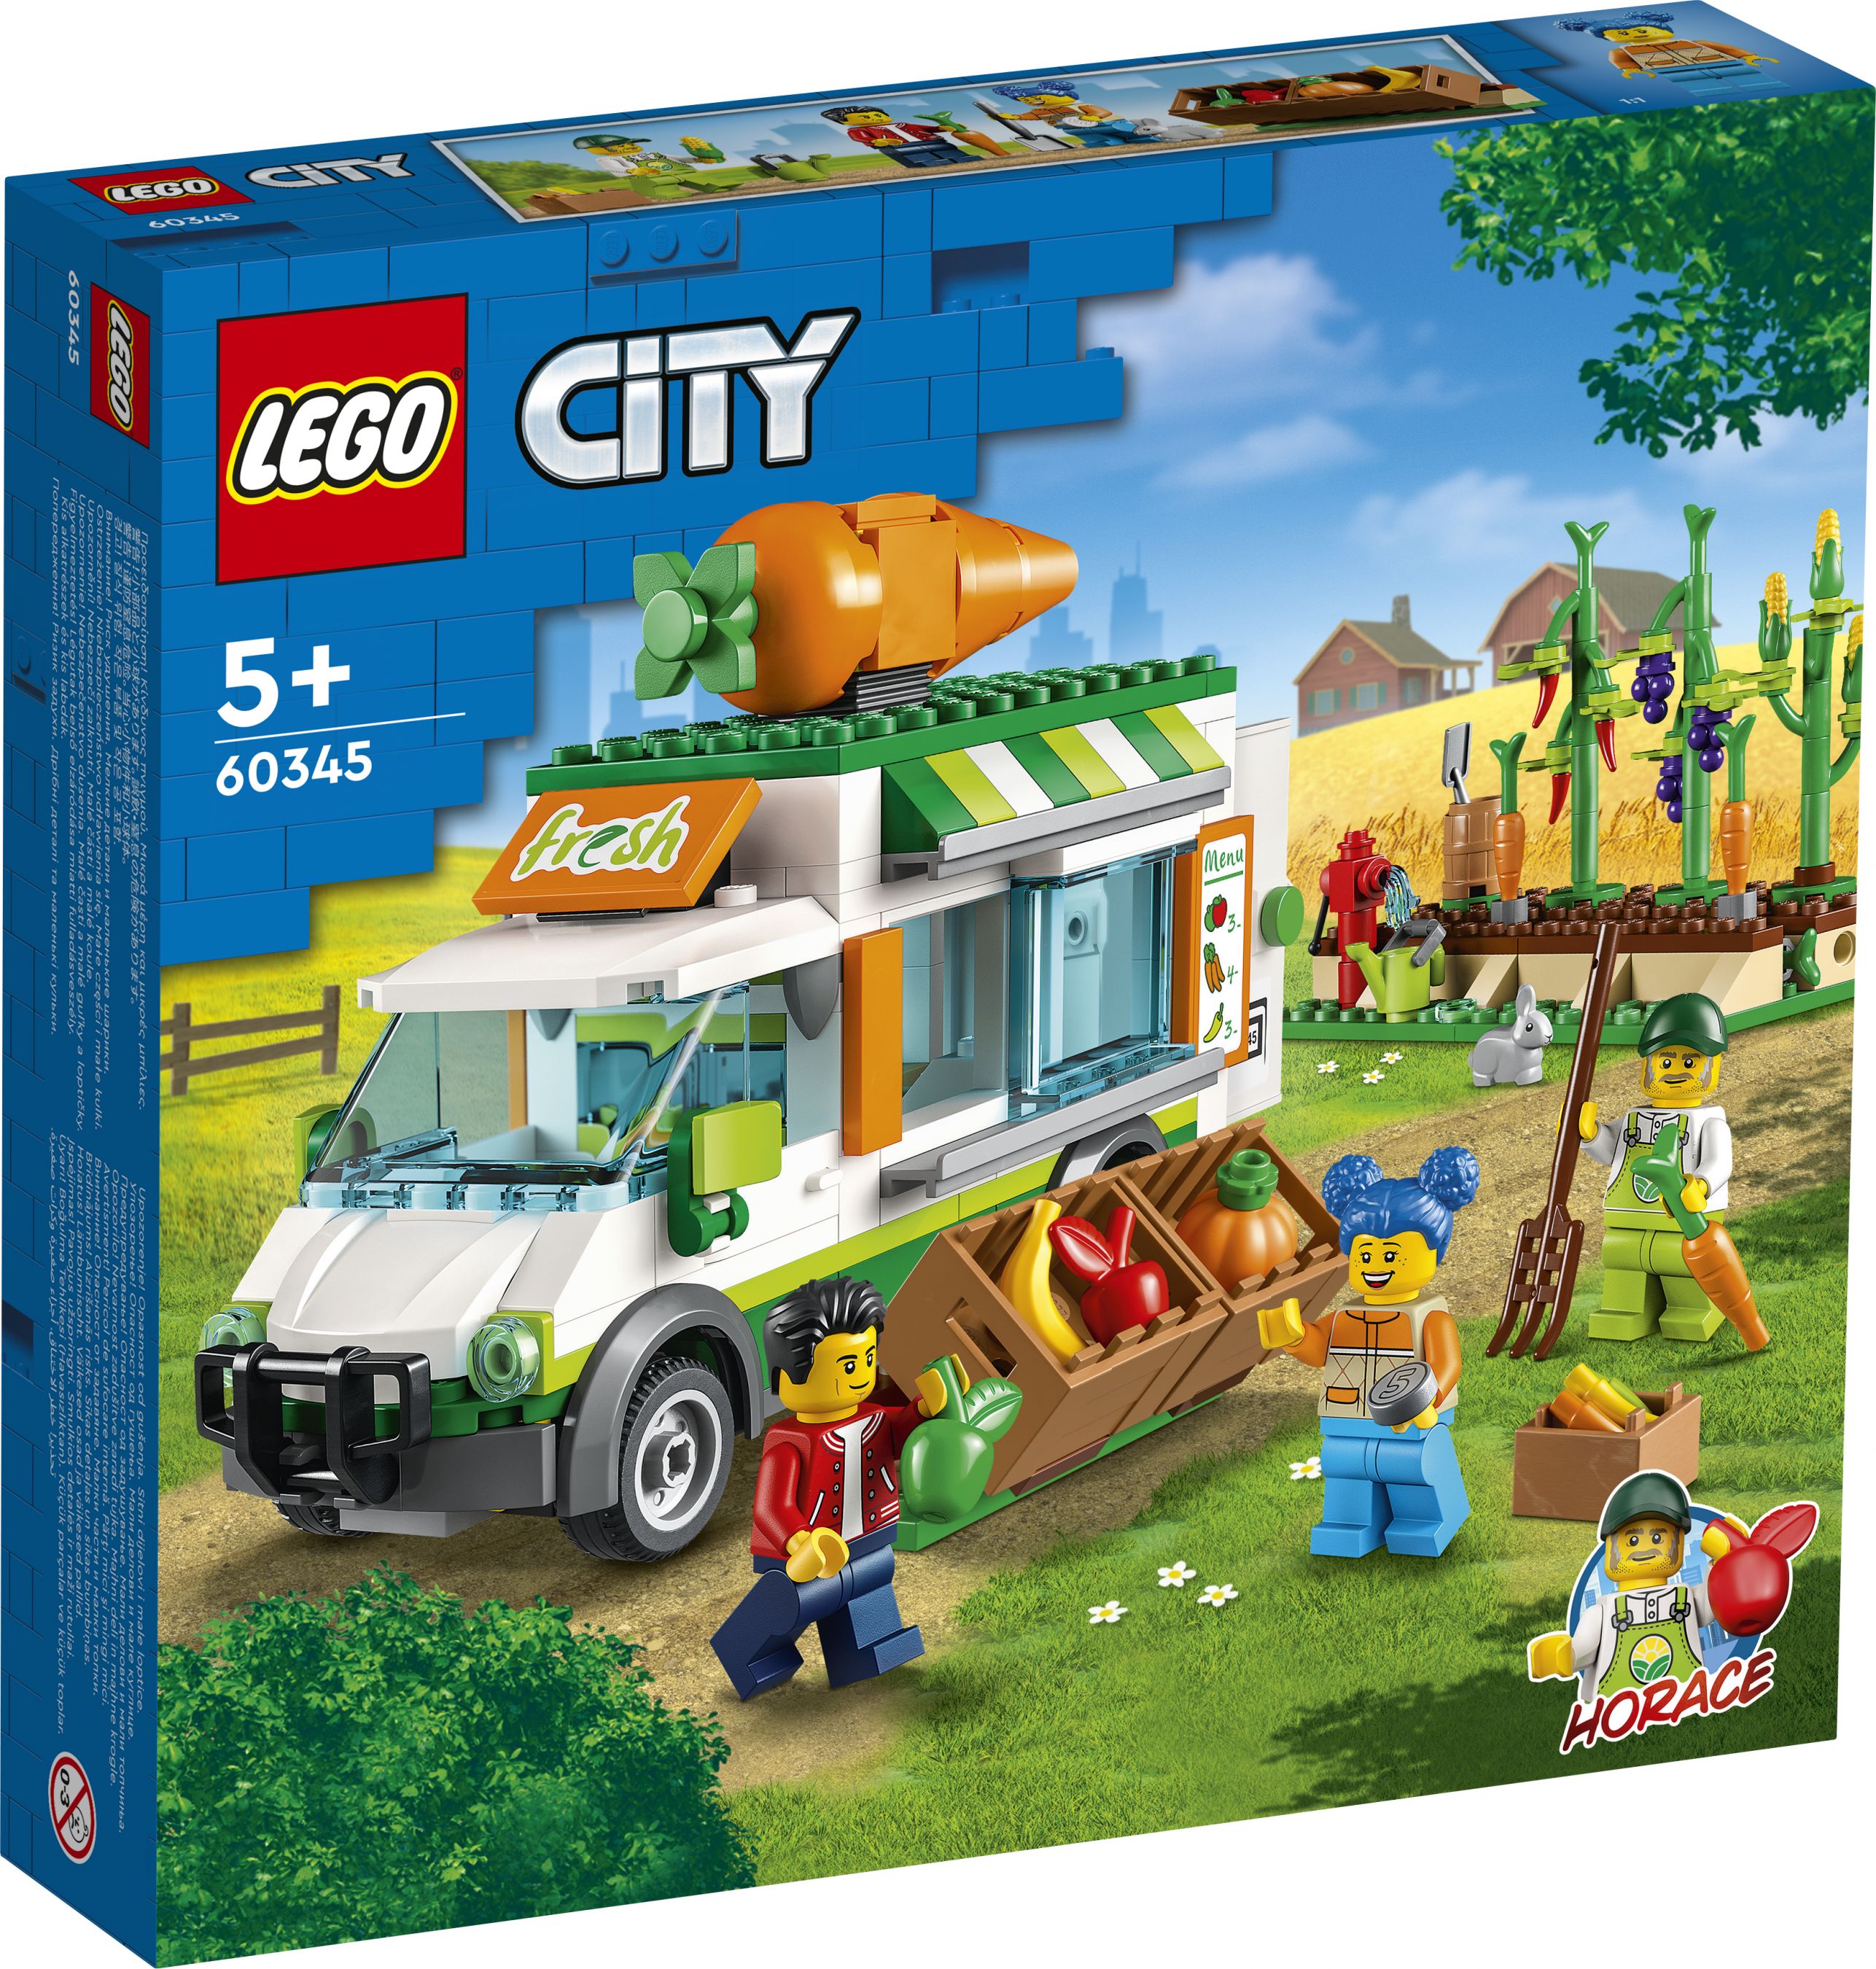 LEGO City 60345 Gemüse-Lieferwagen LEGO_60345_Box1_V29.jpg